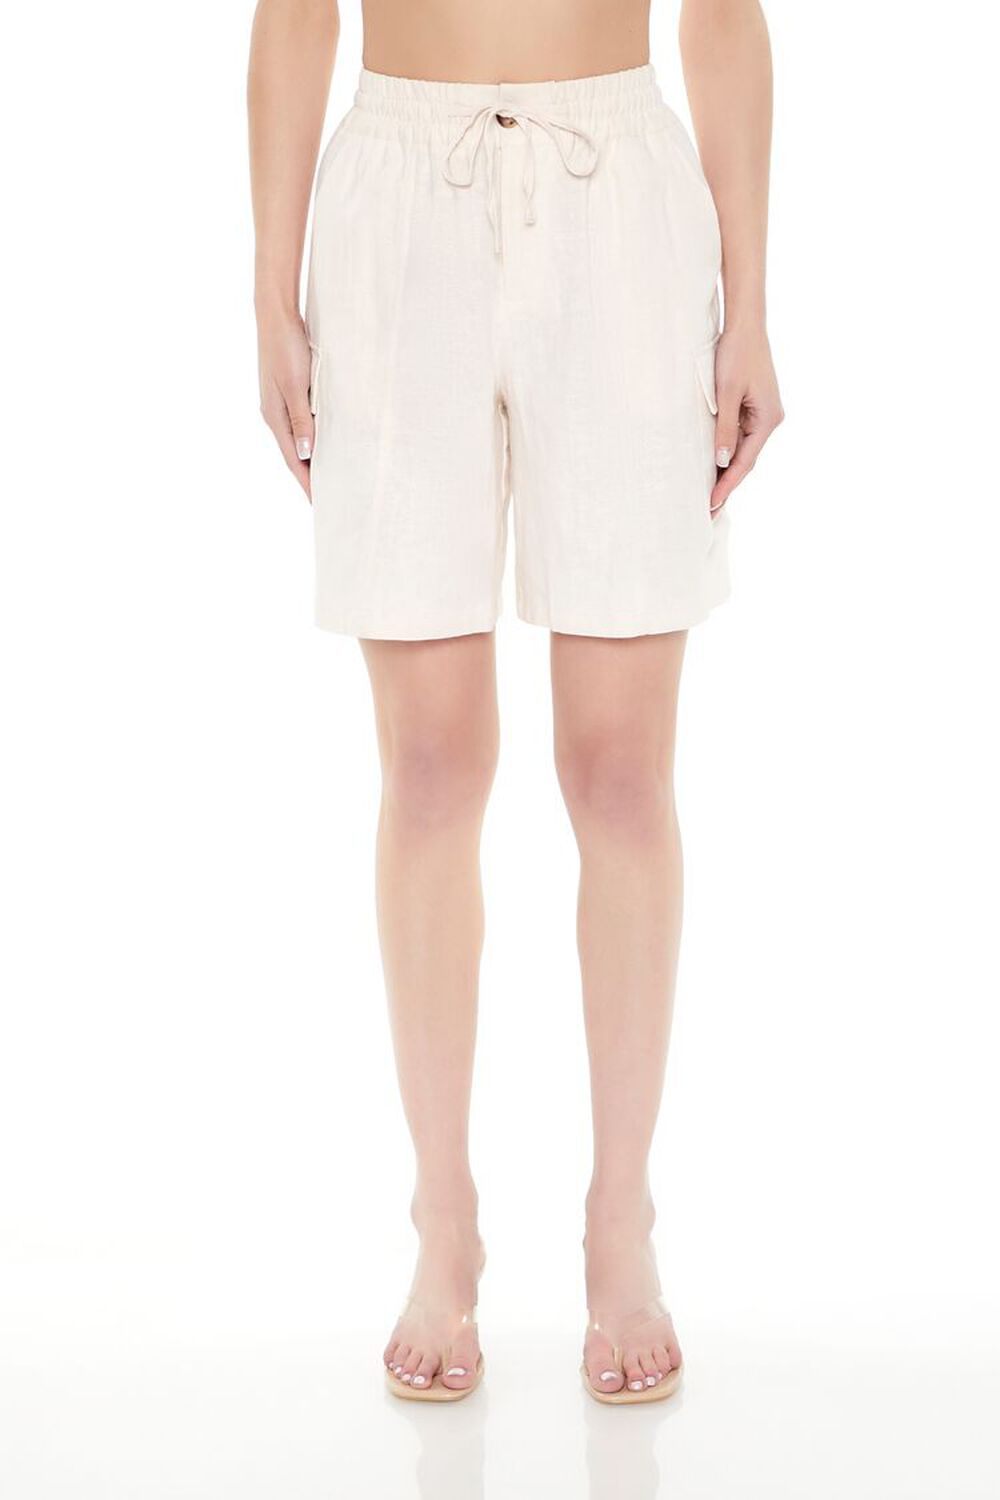 CREAM Linen-Blend Cargo Shorts, image 4